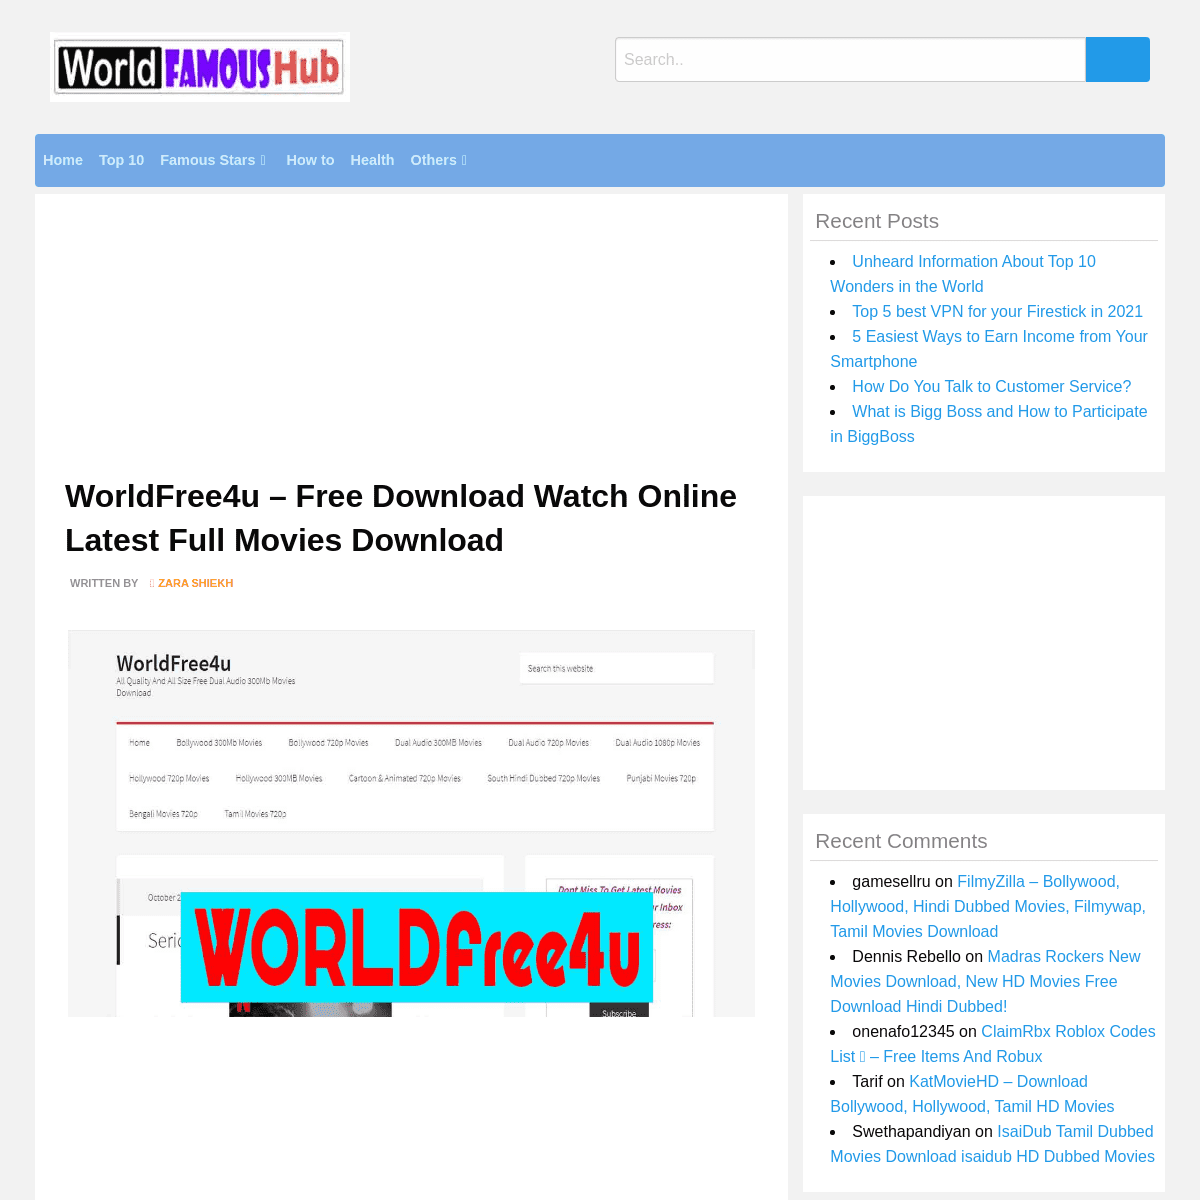 A complete backup of https://worldfamoushub.com/worldfree4u/